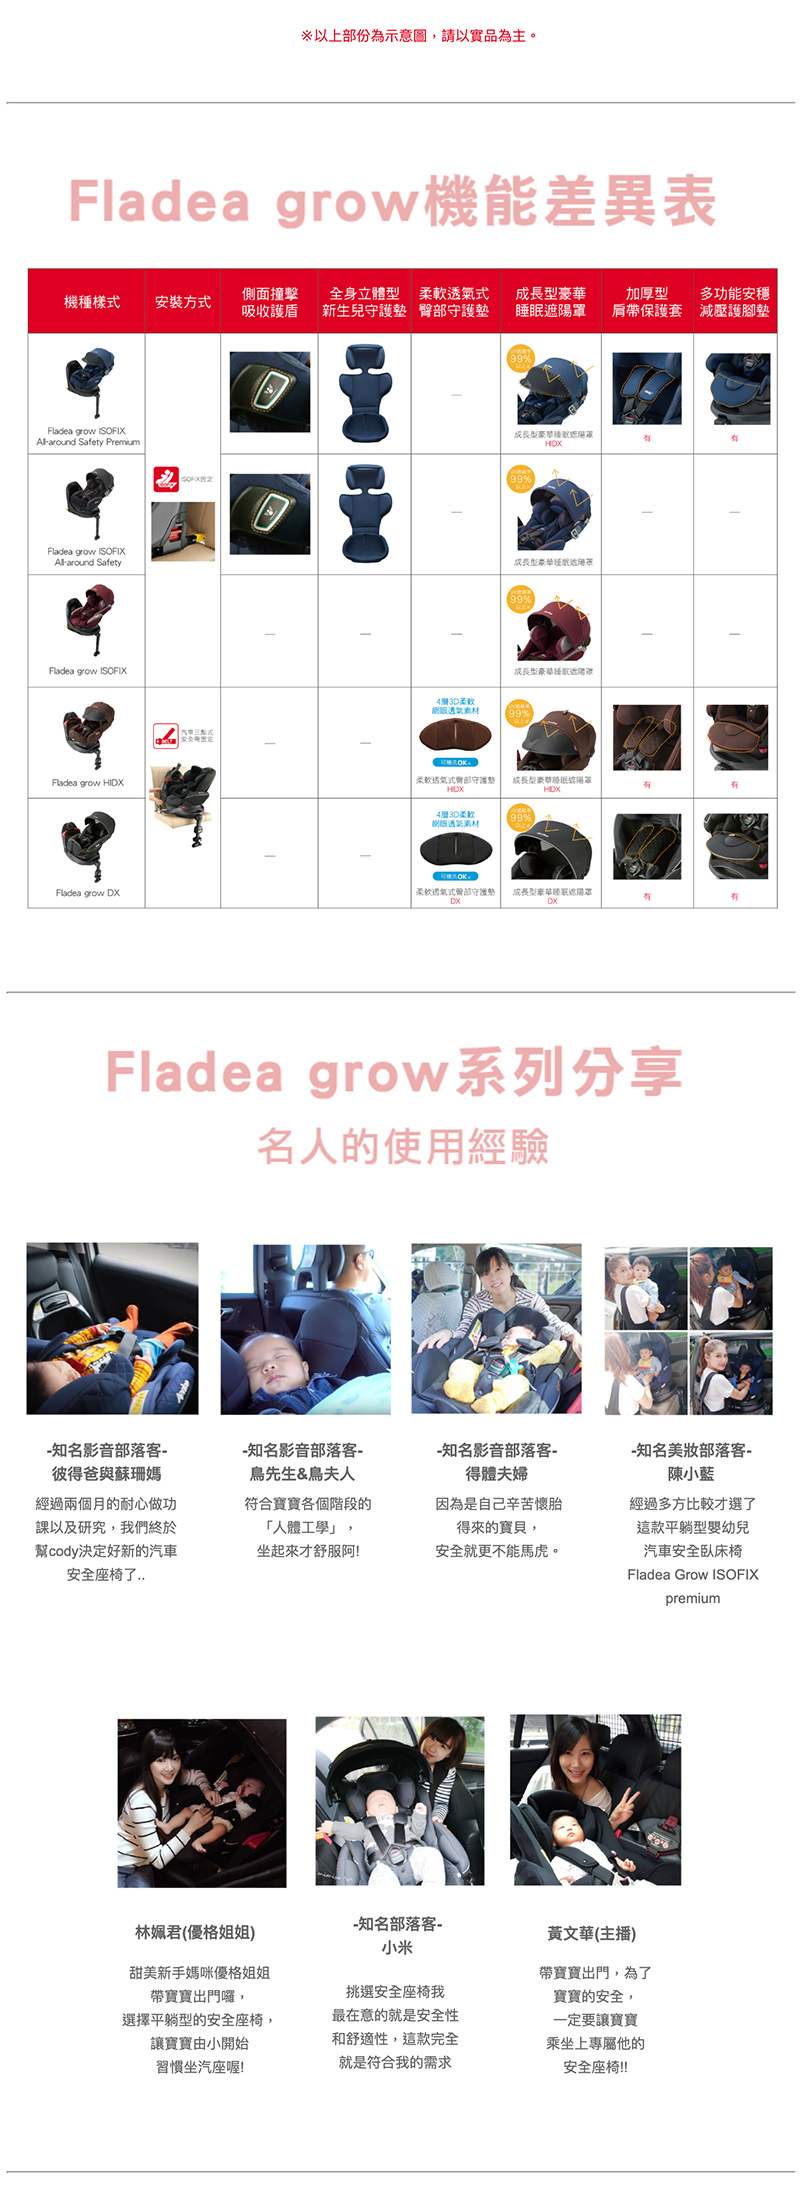 aprica-Fladea-grow-ISOFIX-All-around-Safety-Premium-info06